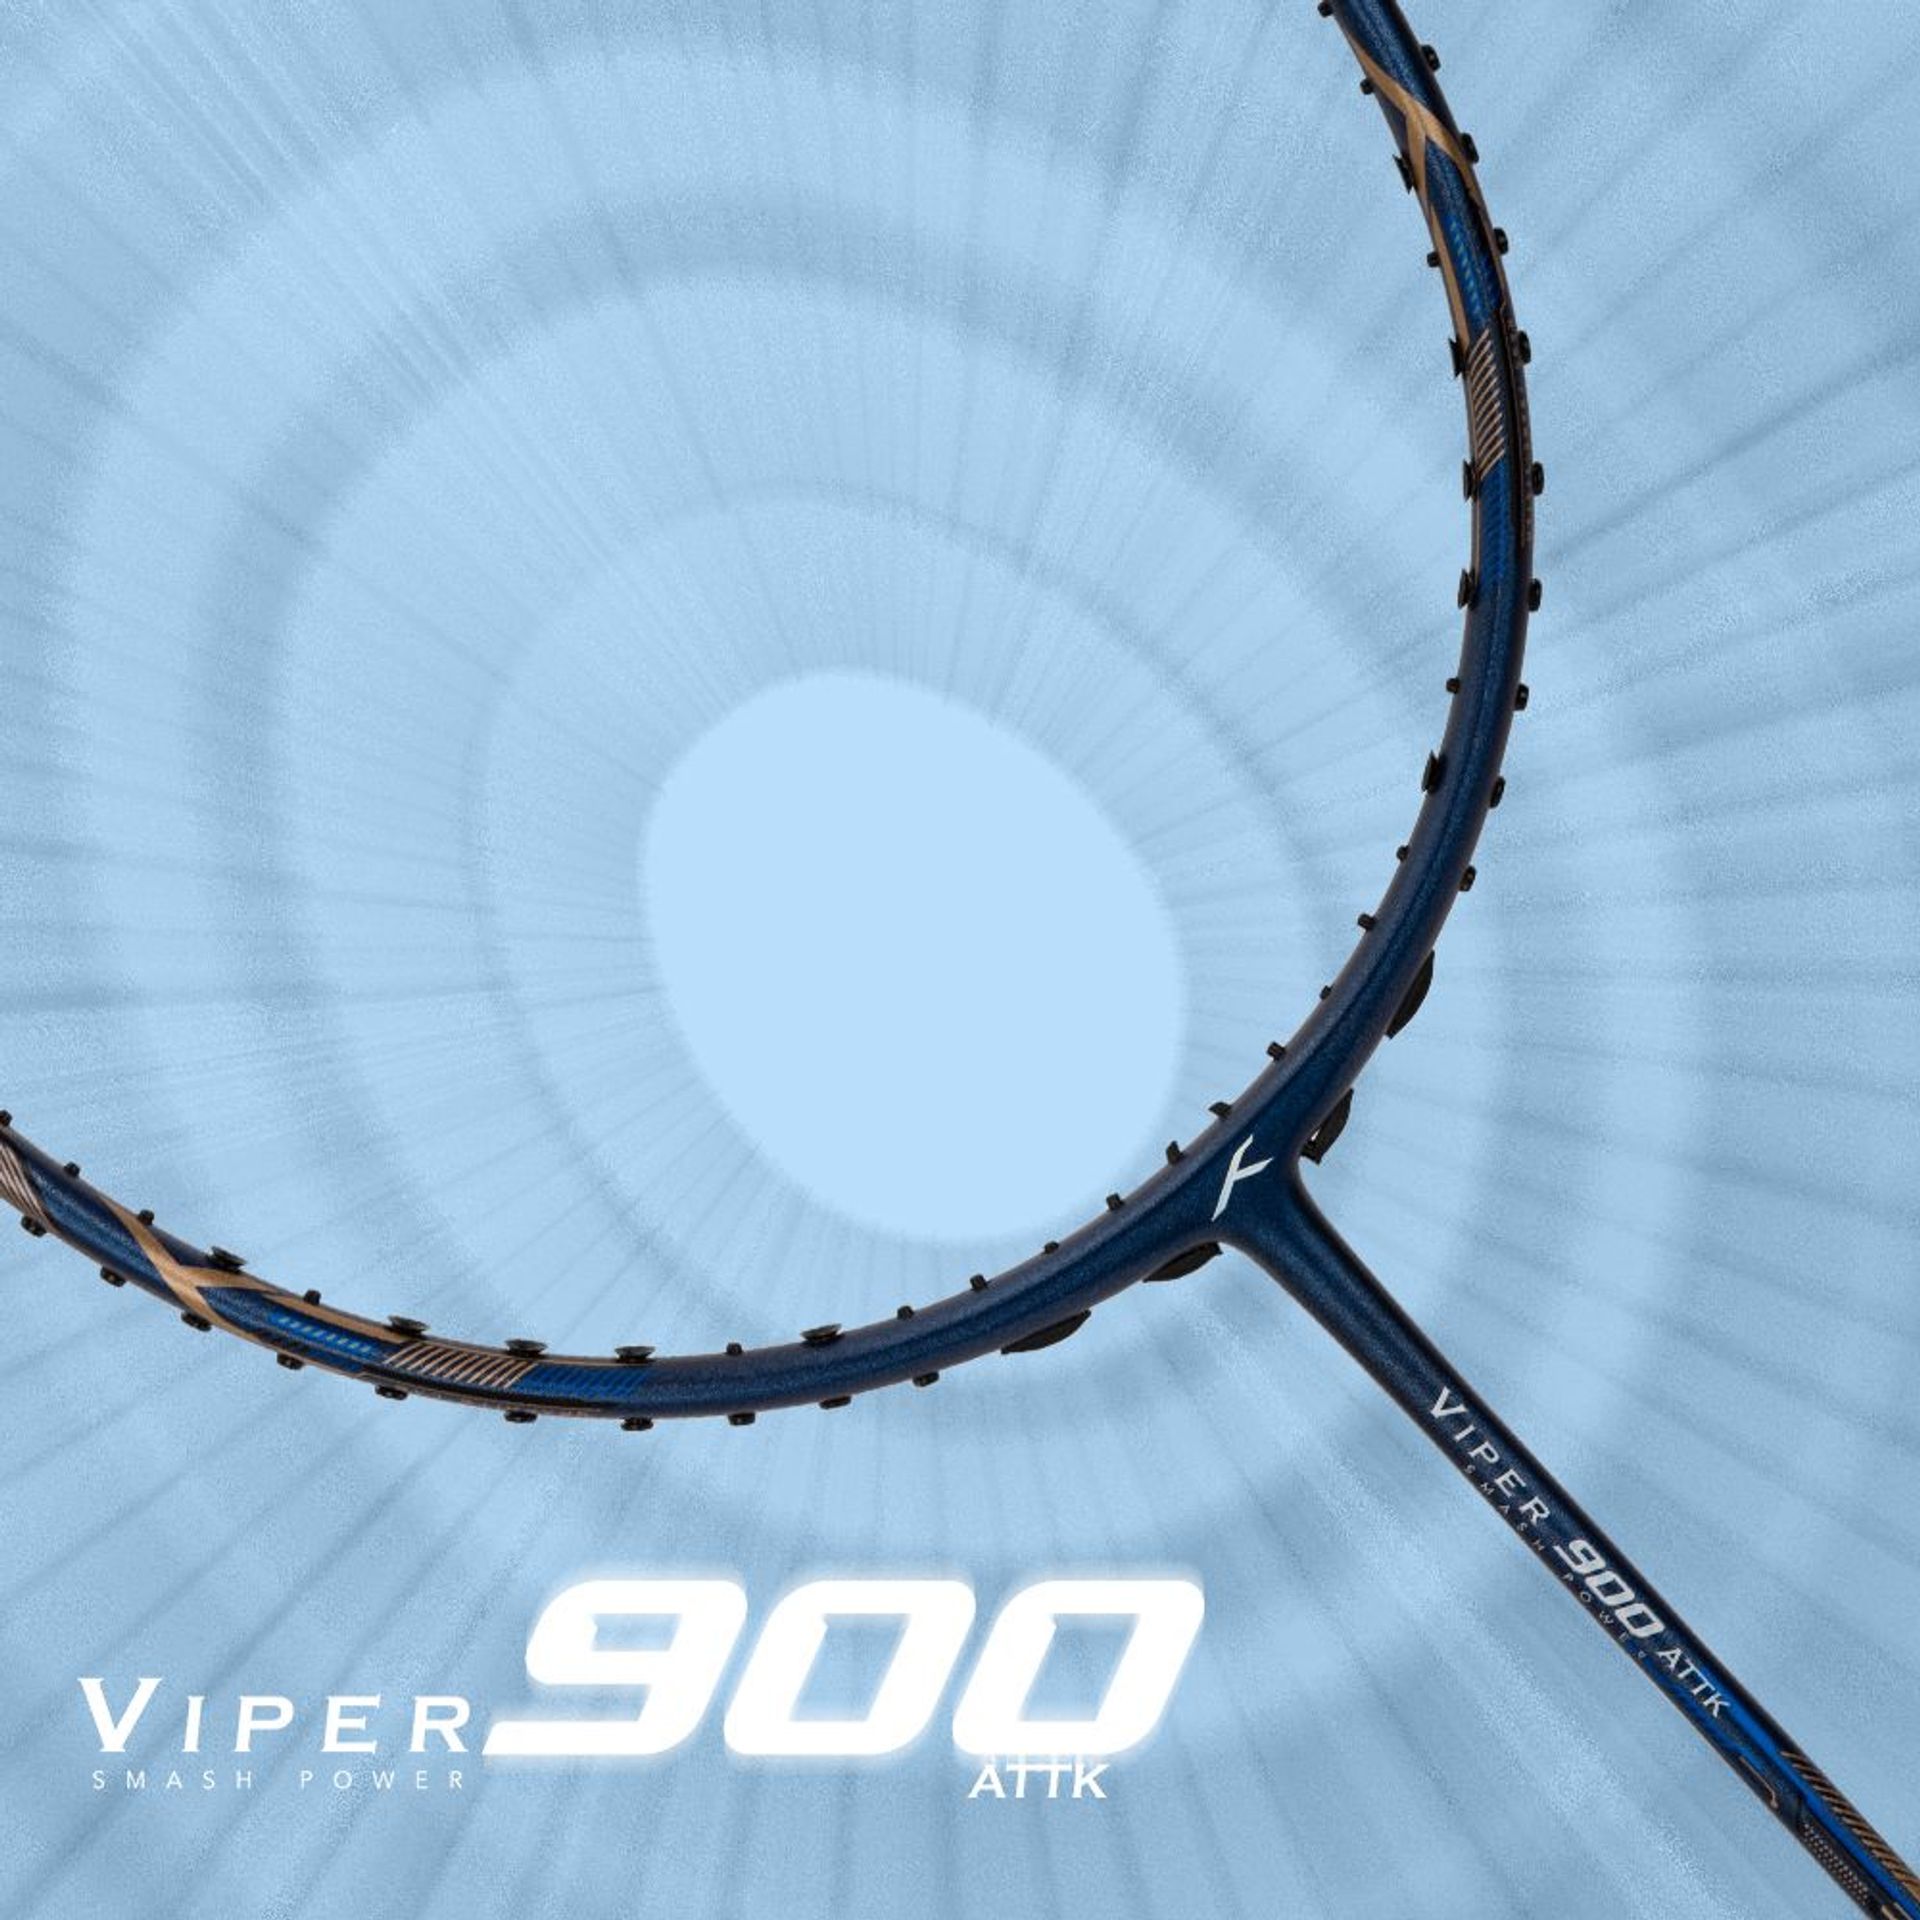 Viper 900 - Badminton Racket - VaporShaft 7.0mm